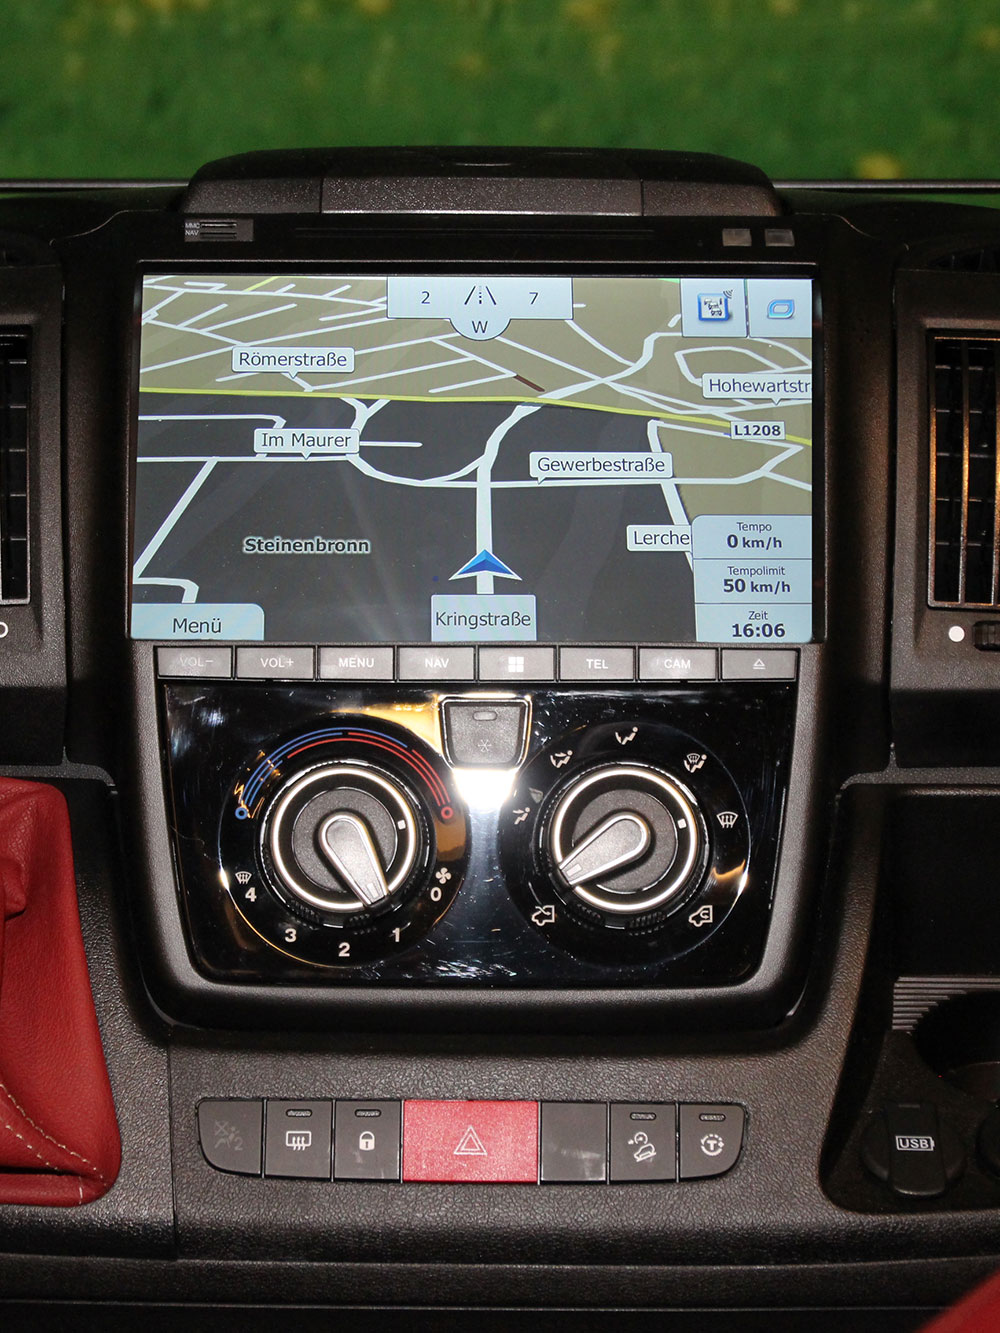 Ducato navigatie 10.2 Touchscreen parrot carkit carplay android auto